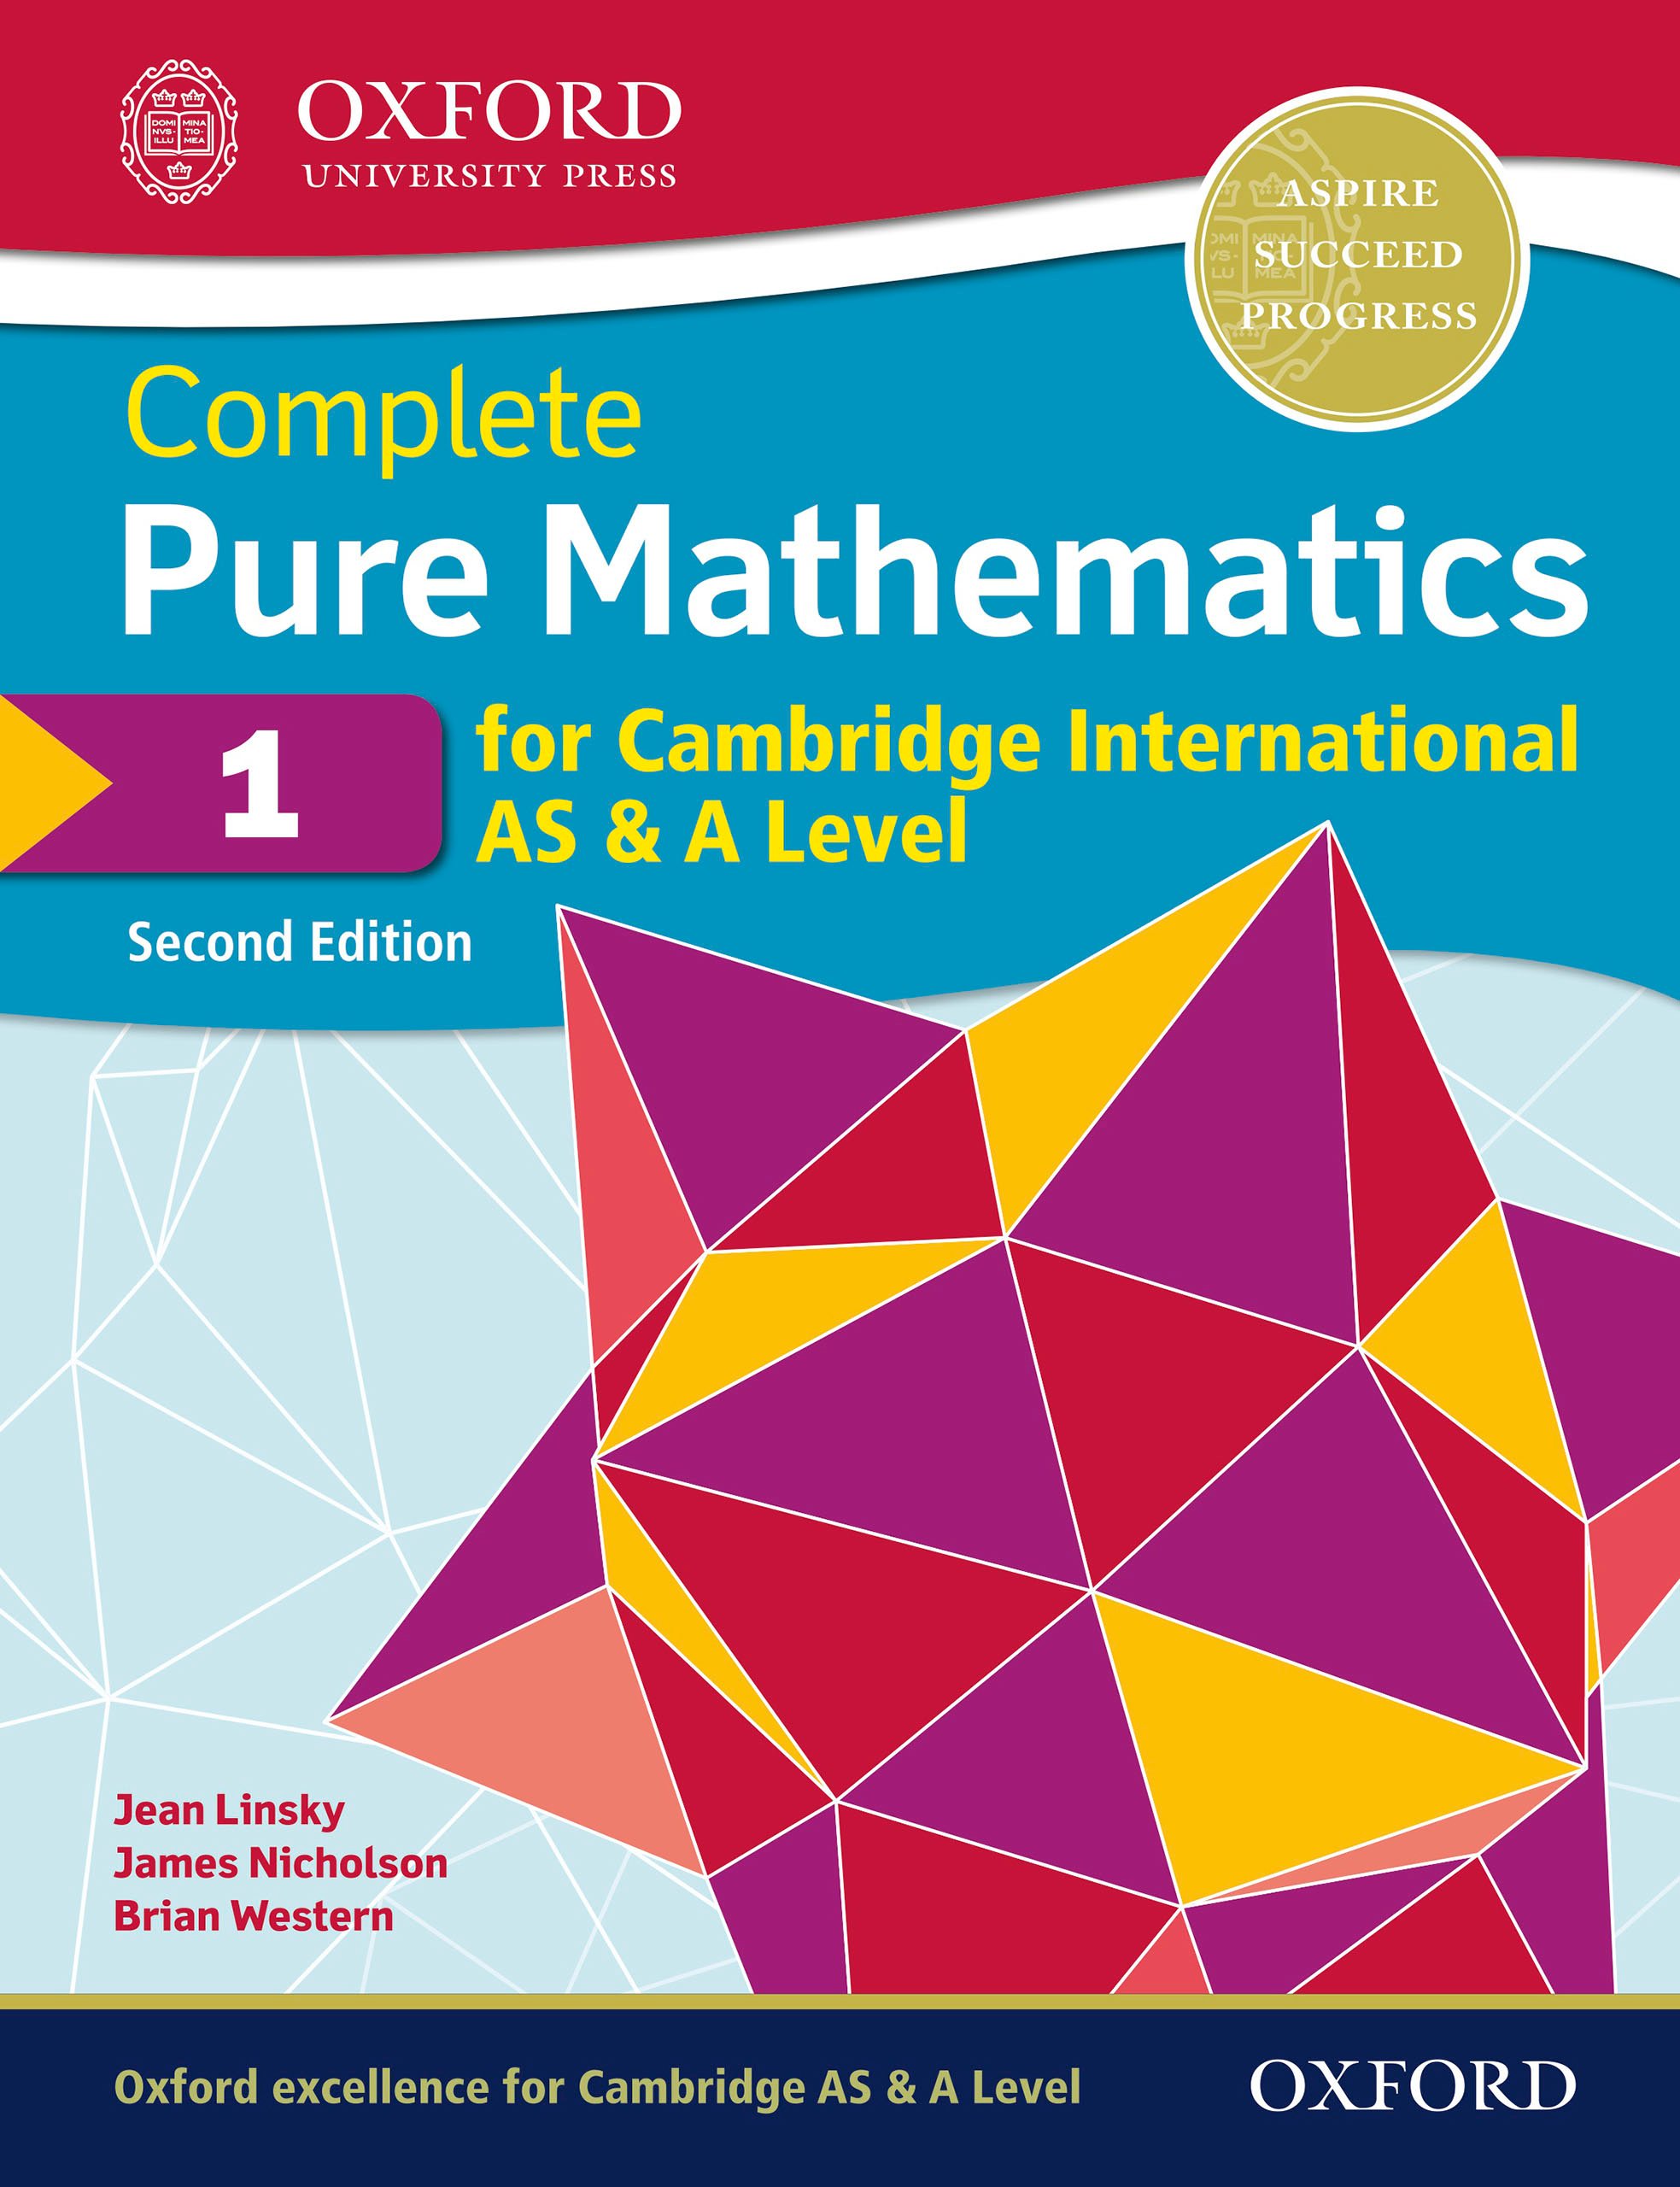 A level pure mathematics pdf free download saraswati stotram mp3 free download